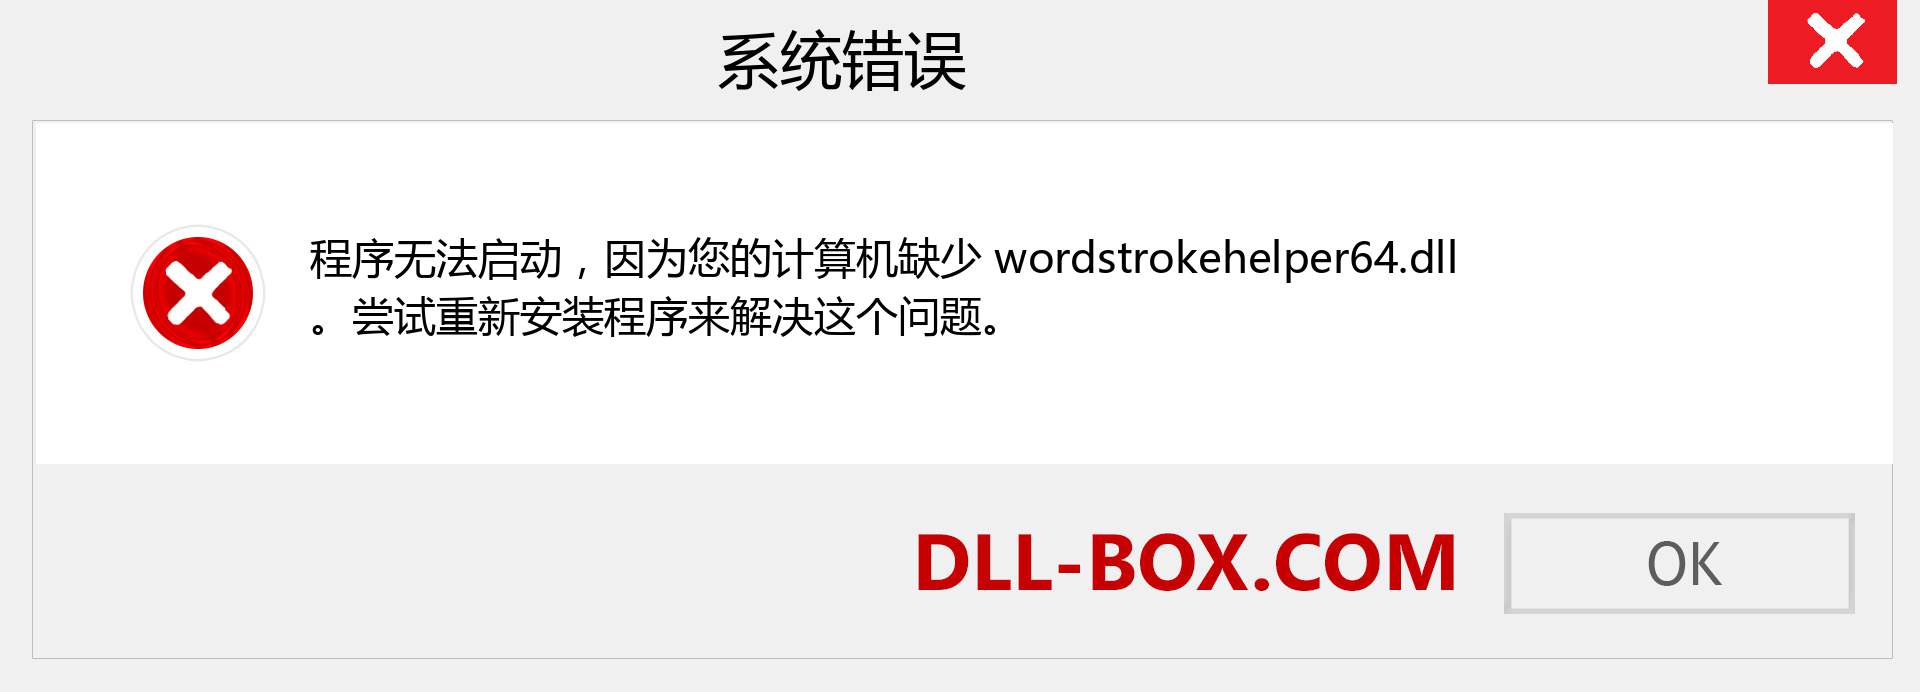 wordstrokehelper64.dll 文件丢失？。 适用于 Windows 7、8、10 的下载 - 修复 Windows、照片、图像上的 wordstrokehelper64 dll 丢失错误